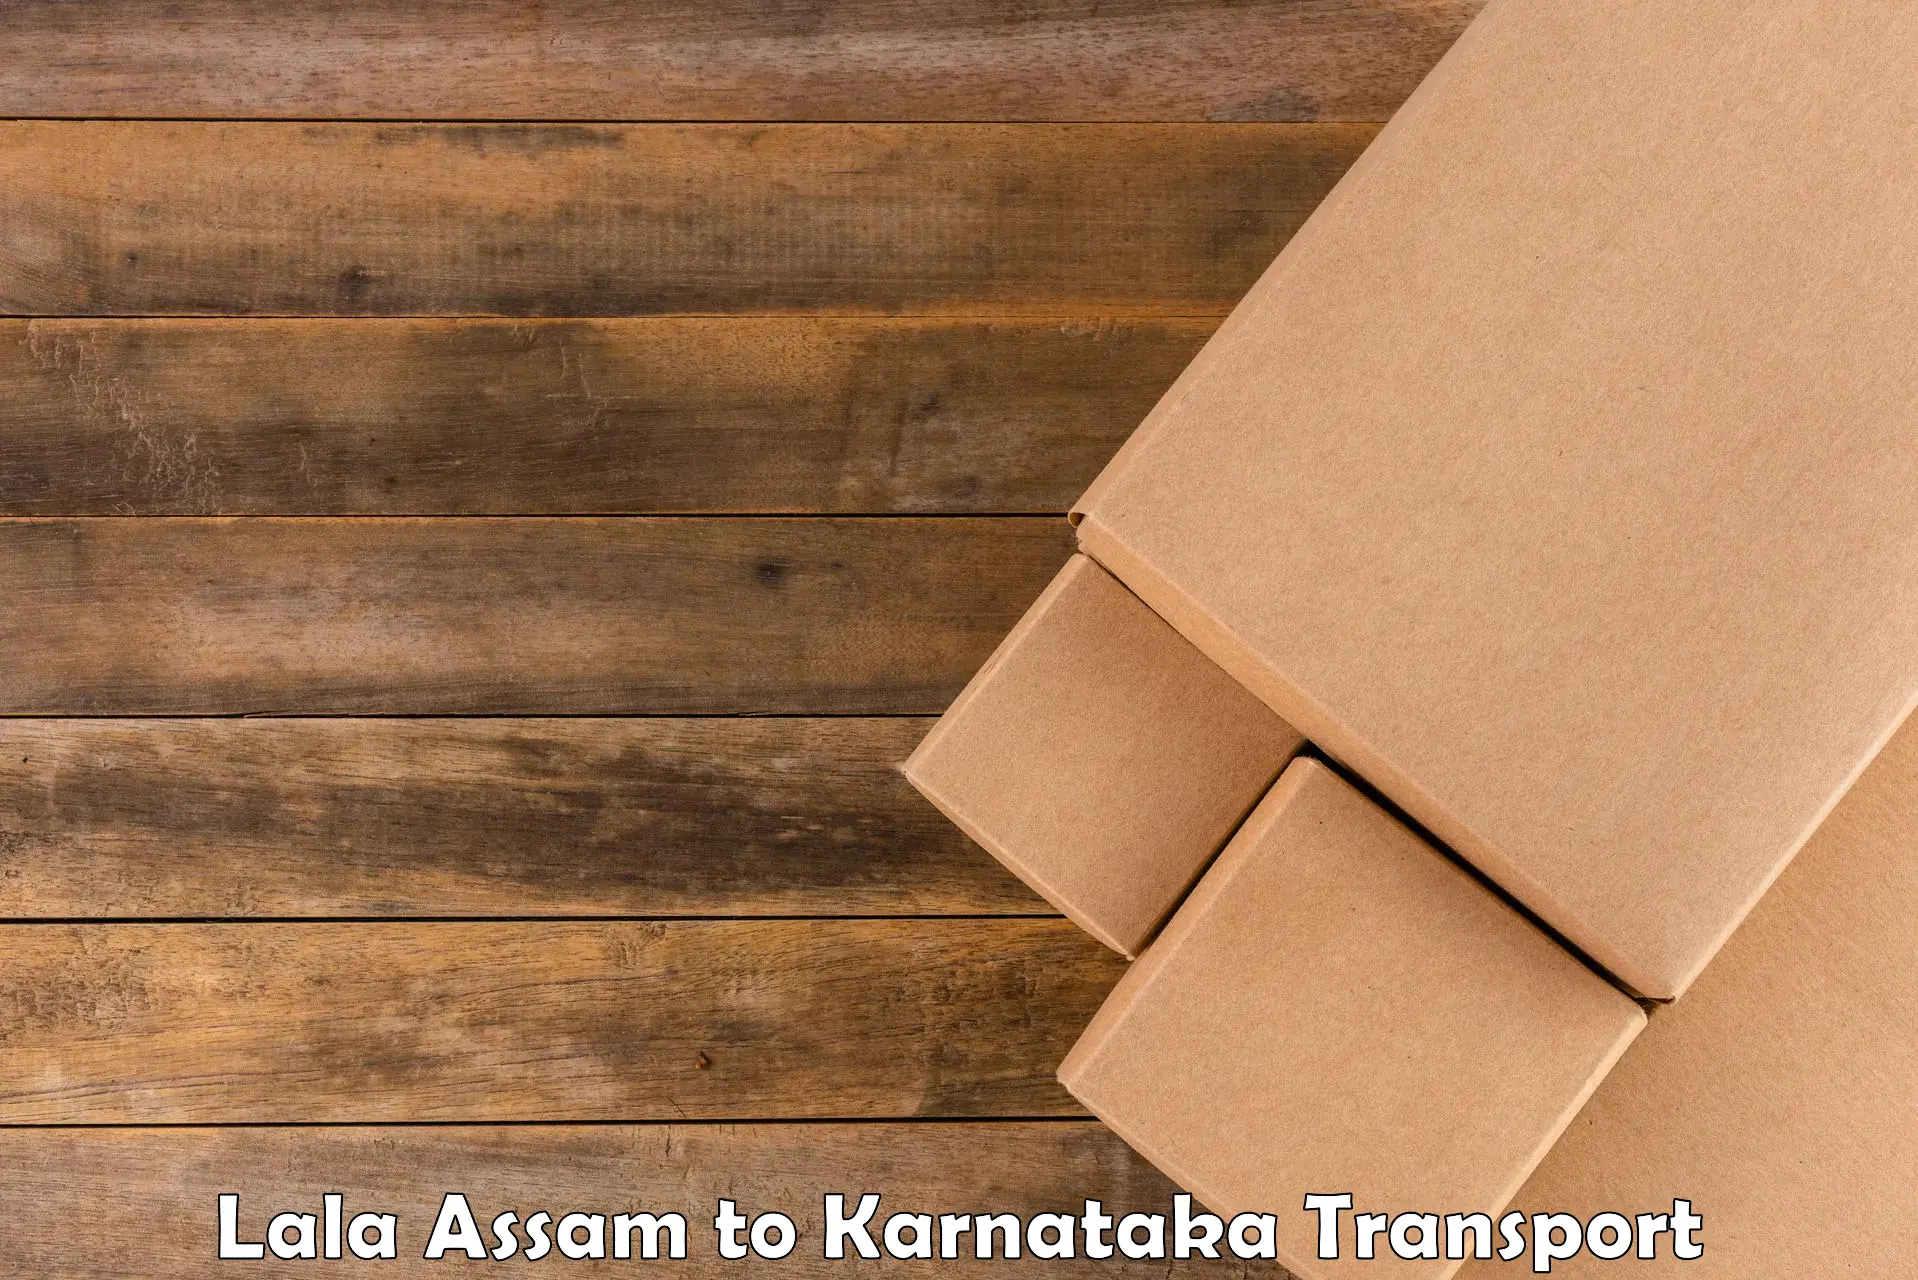 Nearby transport service Lala Assam to Karnataka